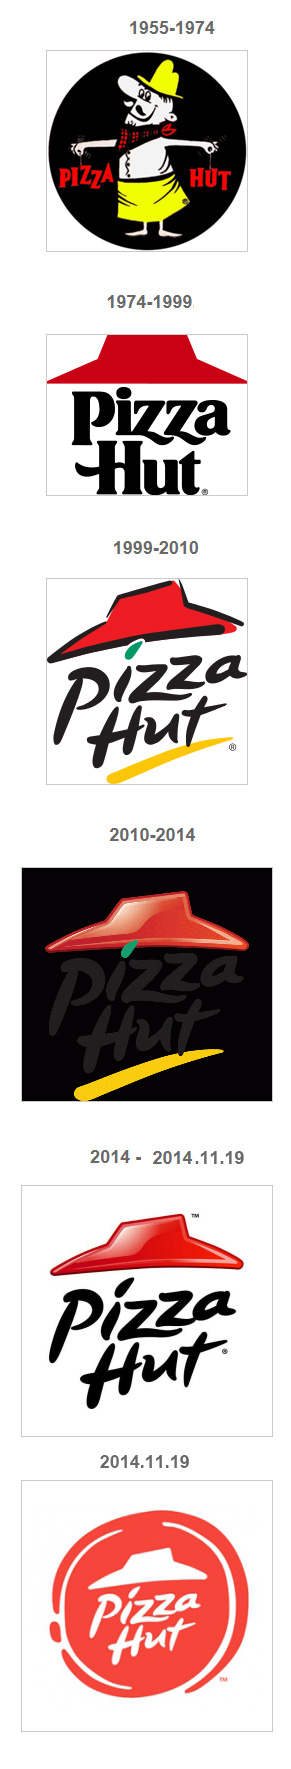 pizzahut-logo-history